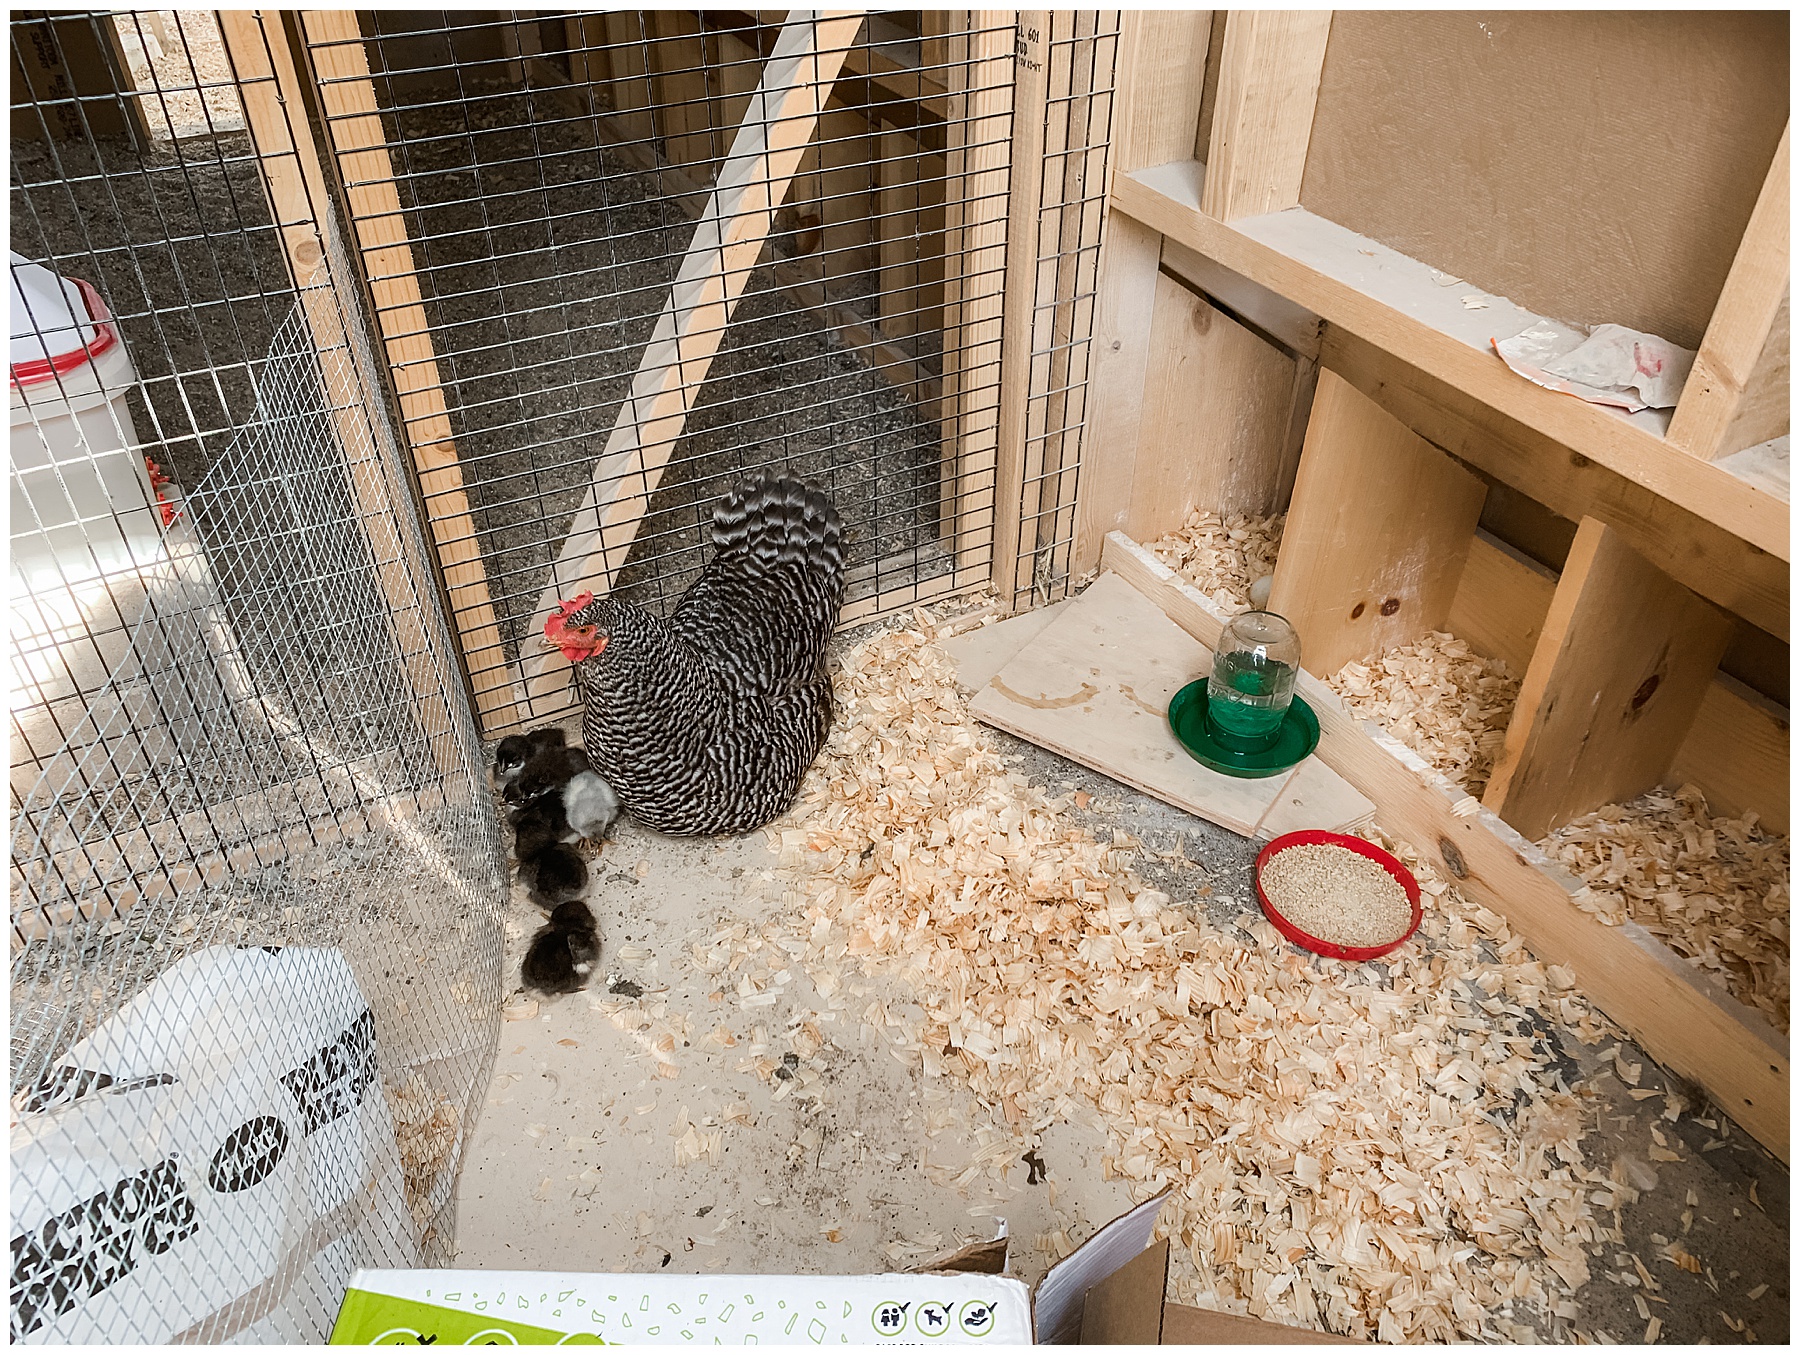 Hatching chicks